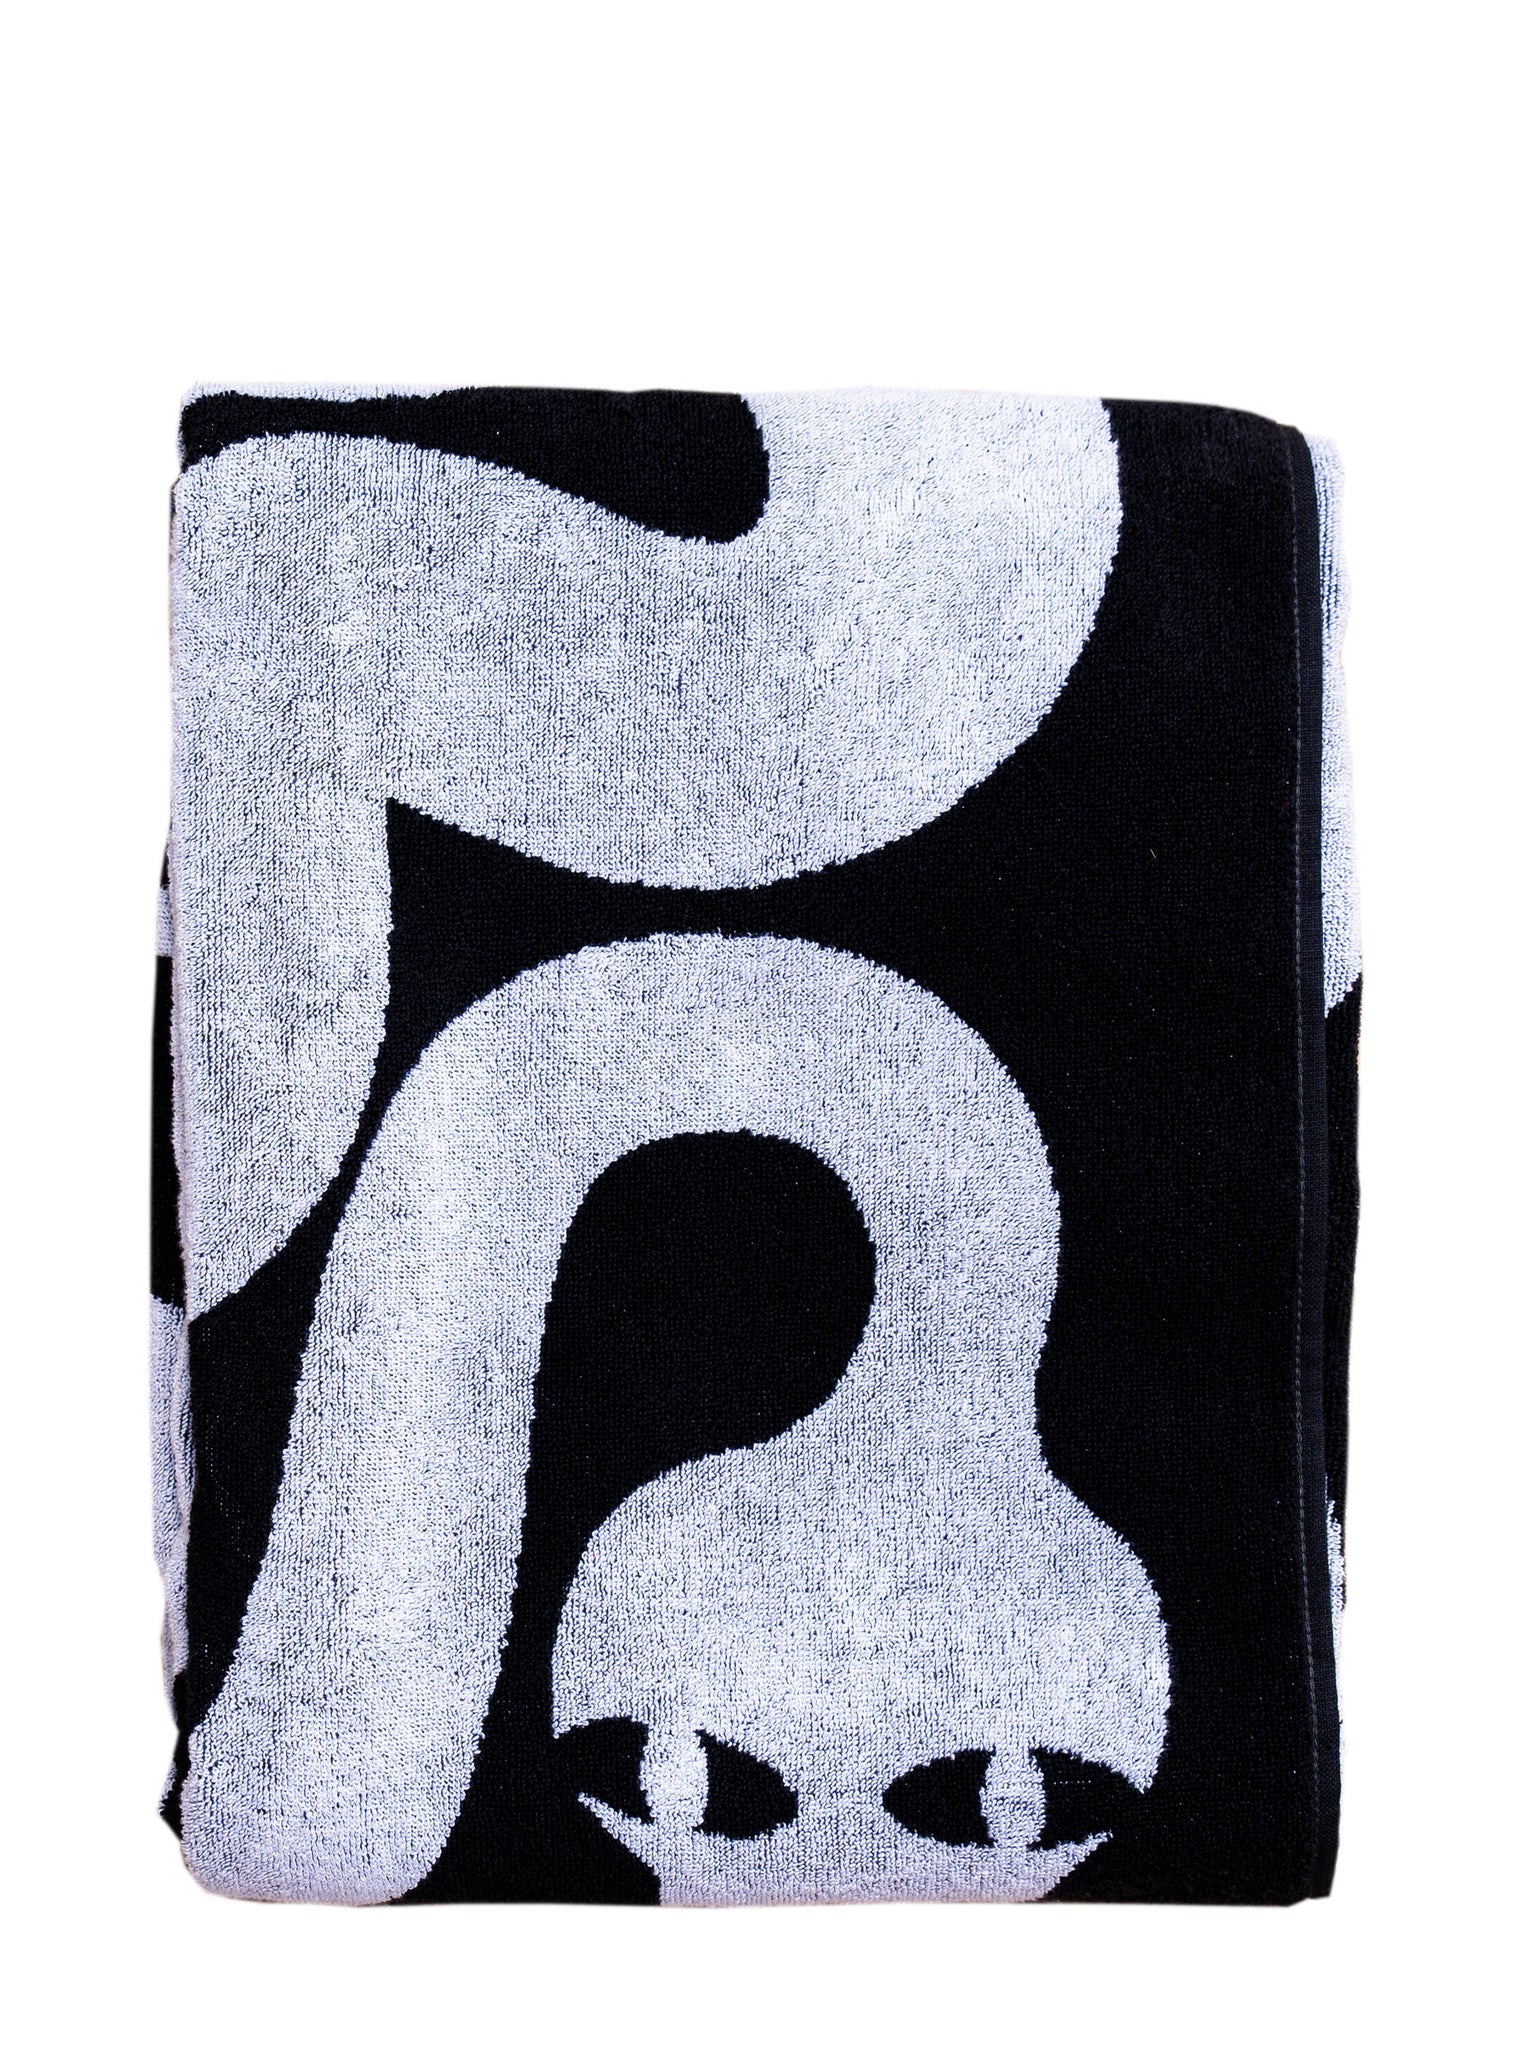 Alexander khabbazi black and white snake beach towel 